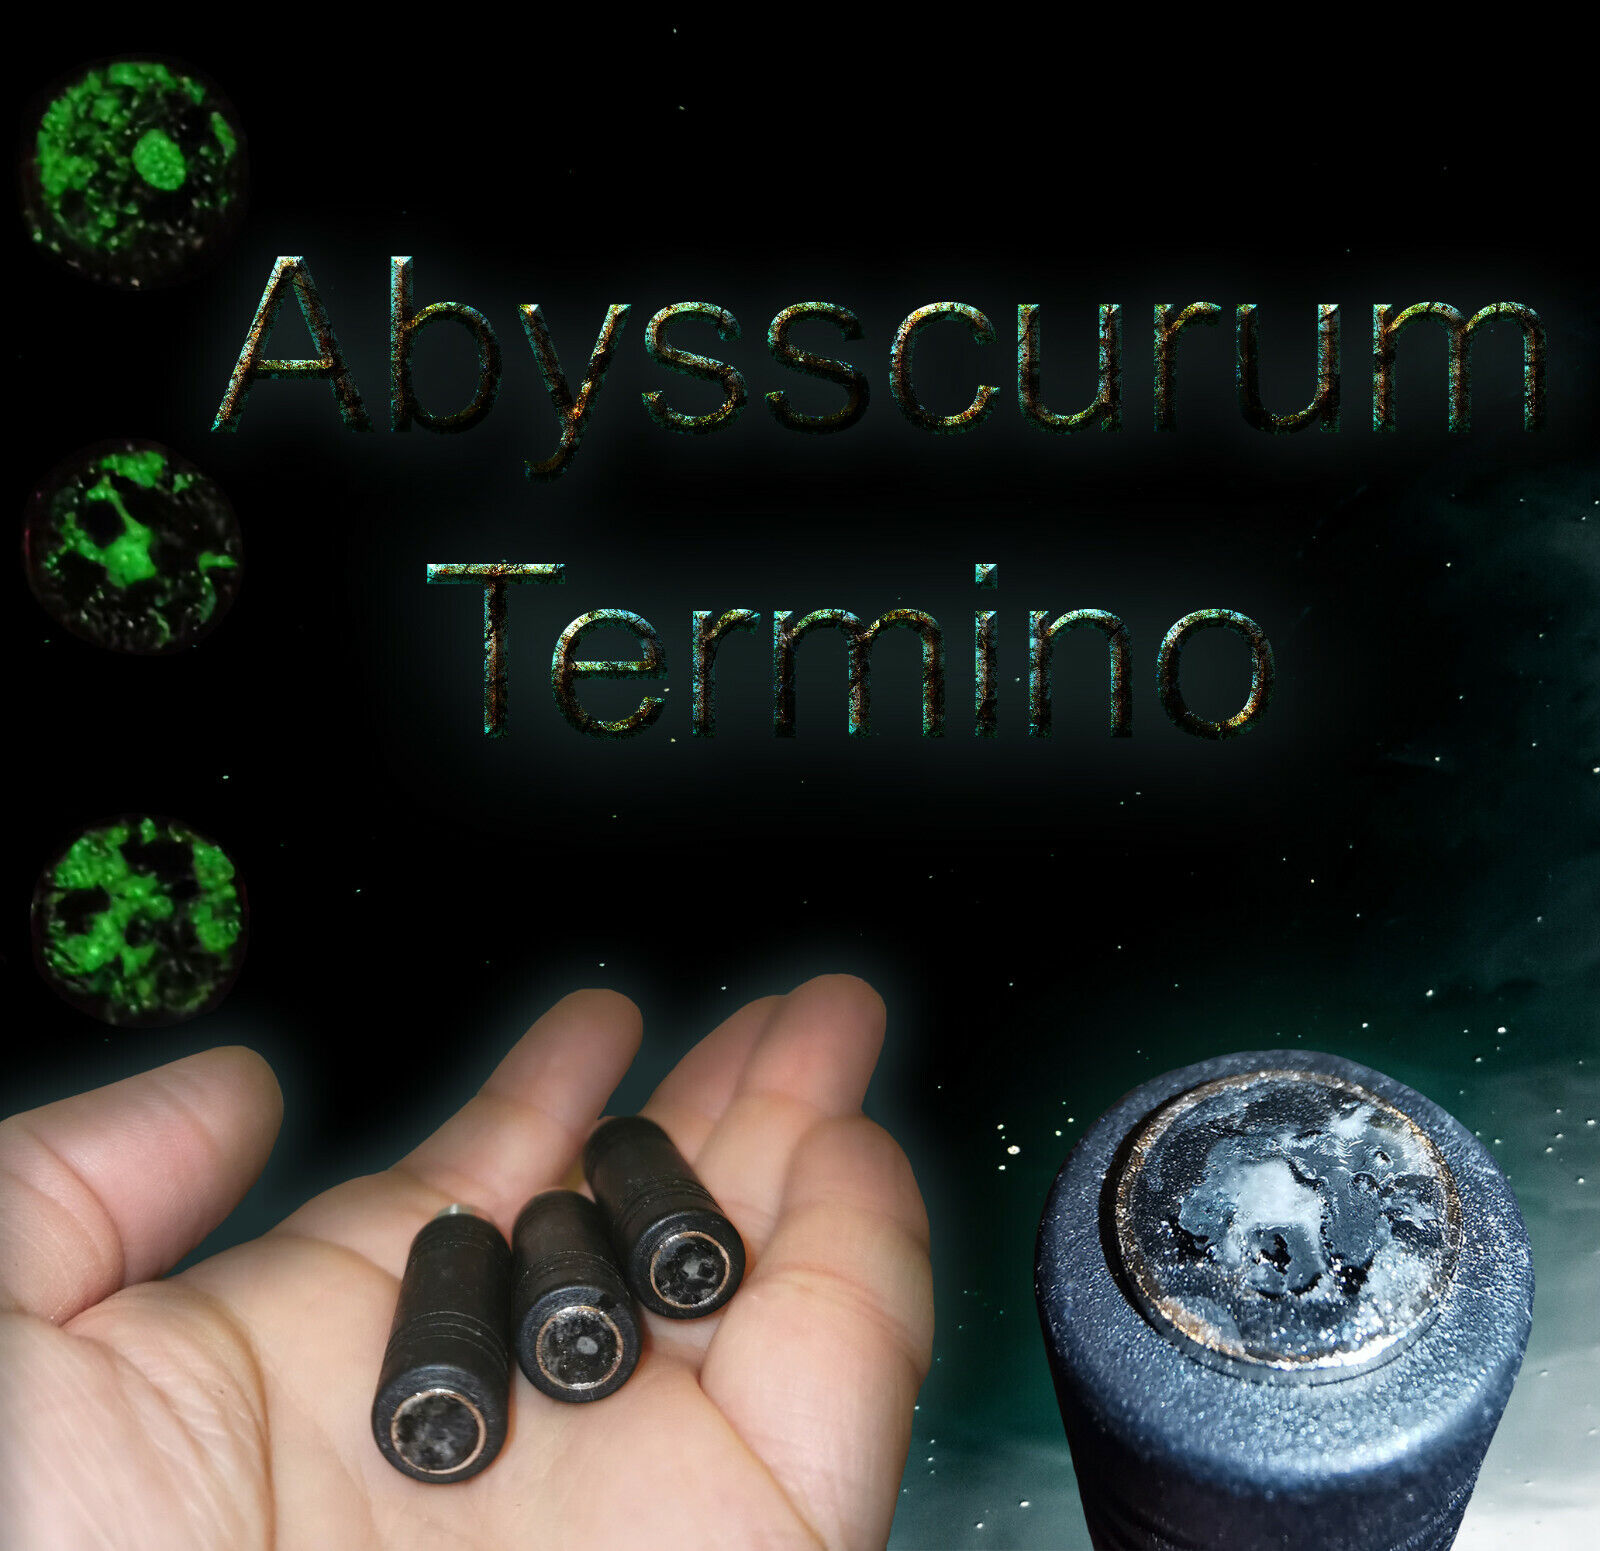 Abysscurum Termino b-stock Class2 (Audiophile Rocks high end Hi Fi tweak)